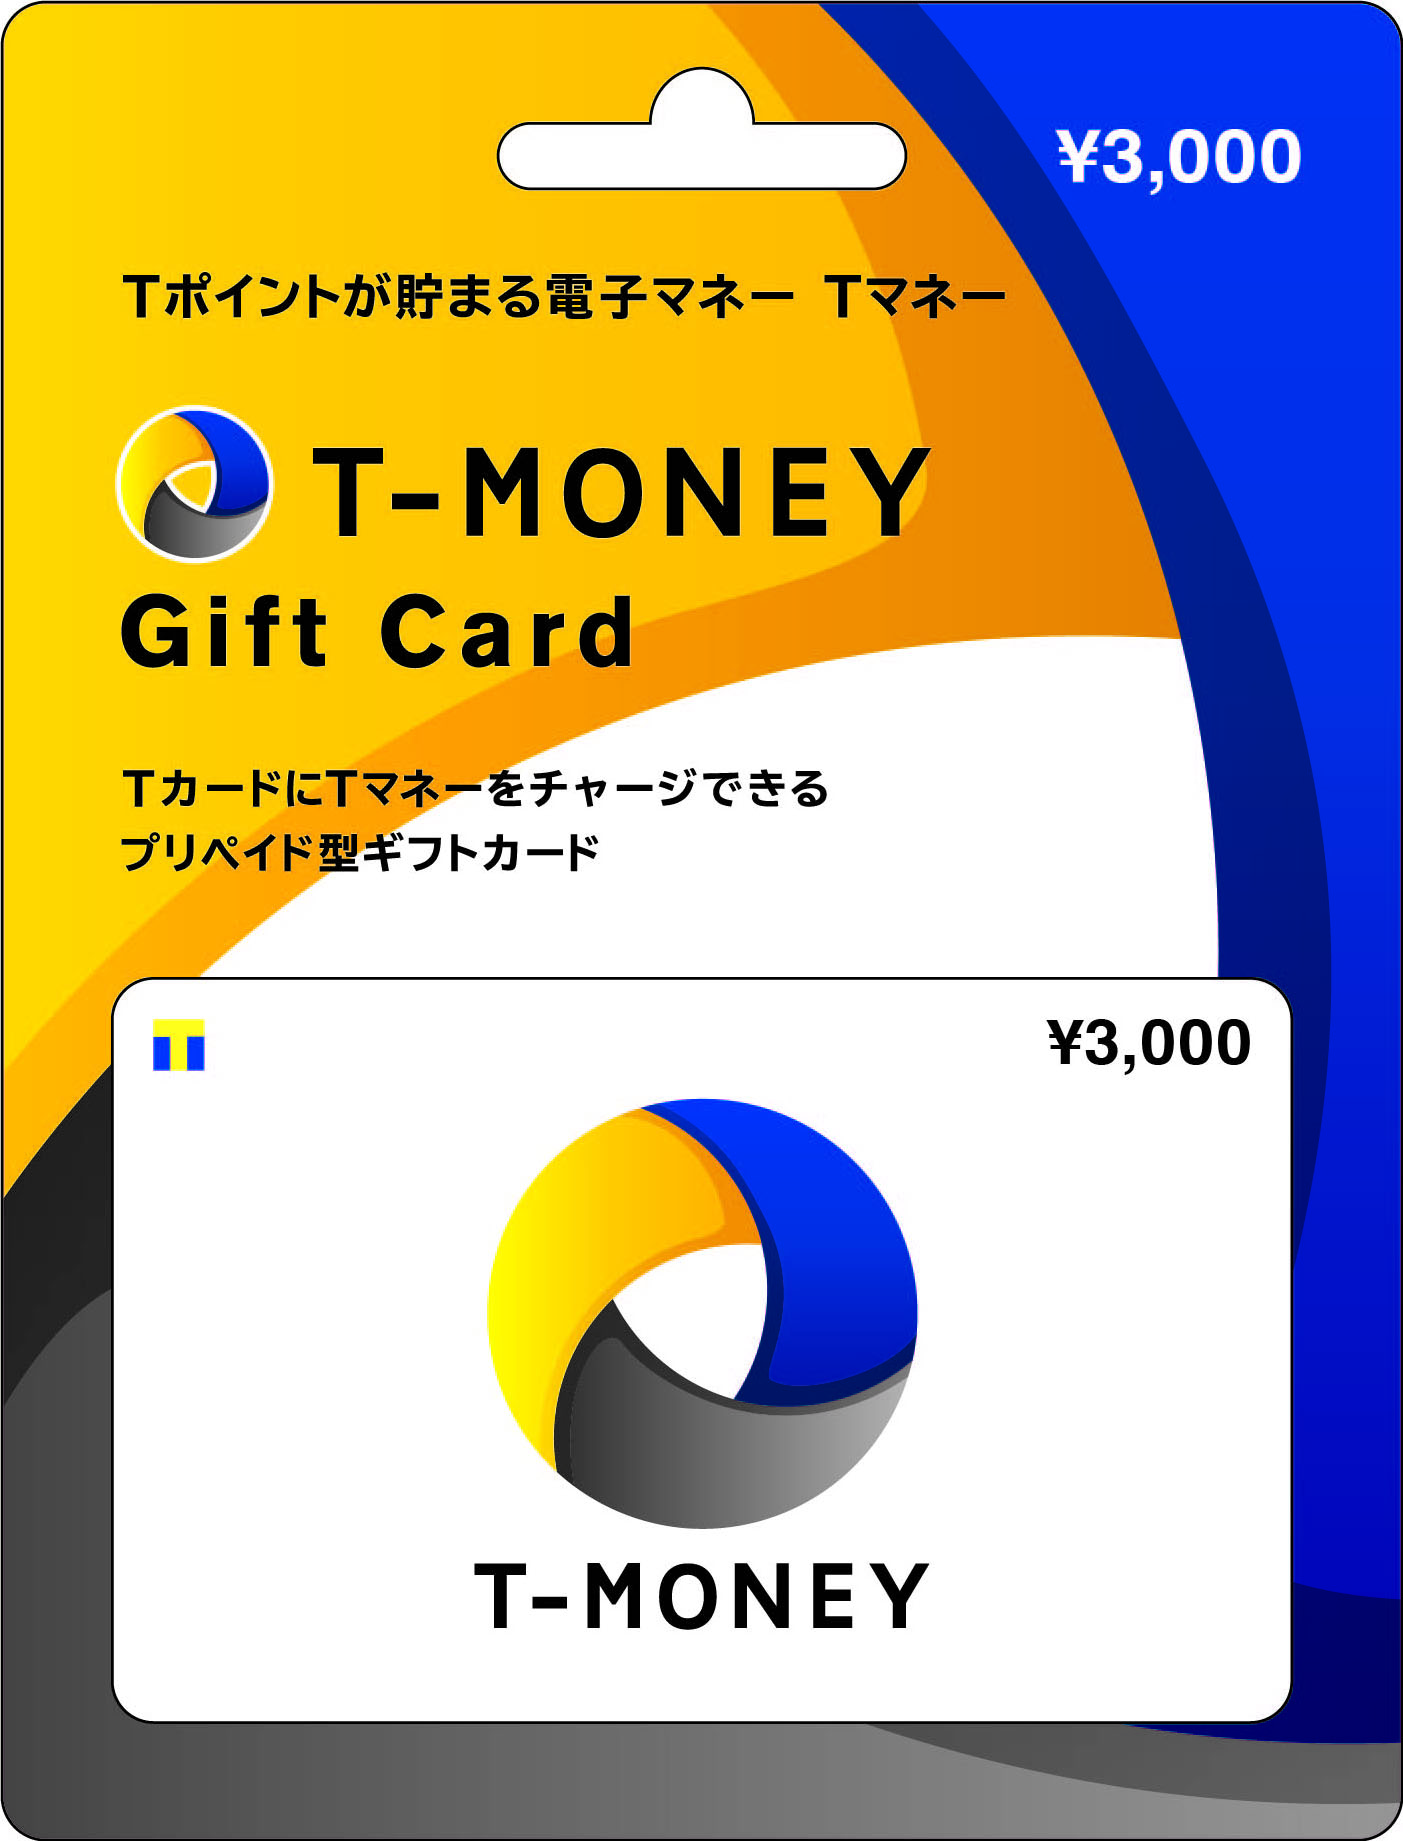 http://www.ccc.co.jp/news/img/card_on_3000.jpg